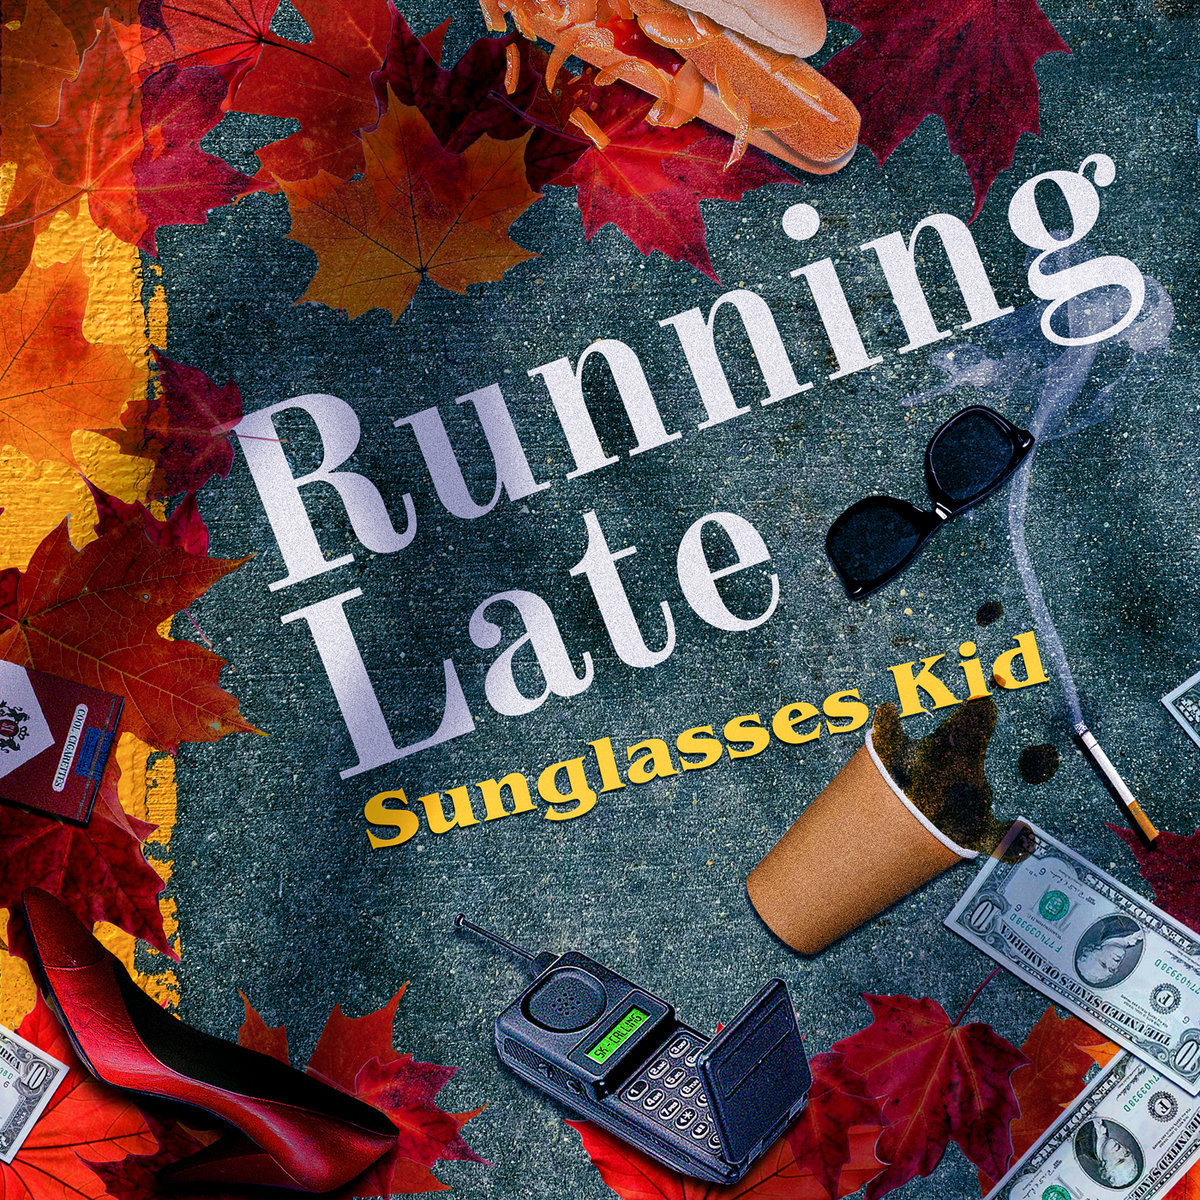 a3321092885 10 - Sunglasses Kid drops new single ‘Running Late’